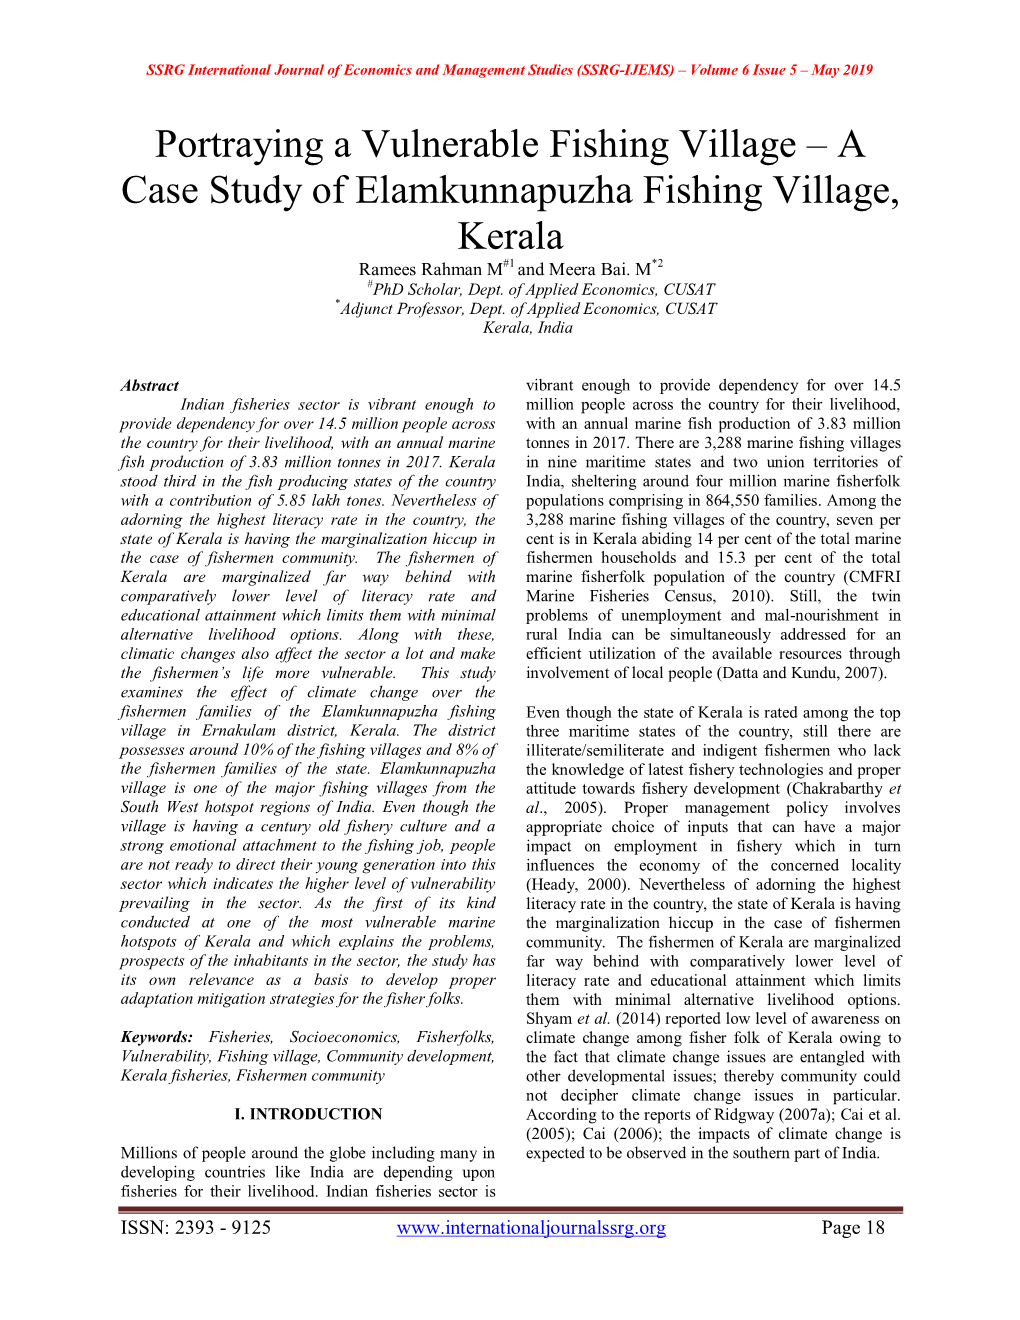 A Case Study of Elamkunnapuzha Fishing Village, Kerala Ramees Rahman M#1 and Meera Bai